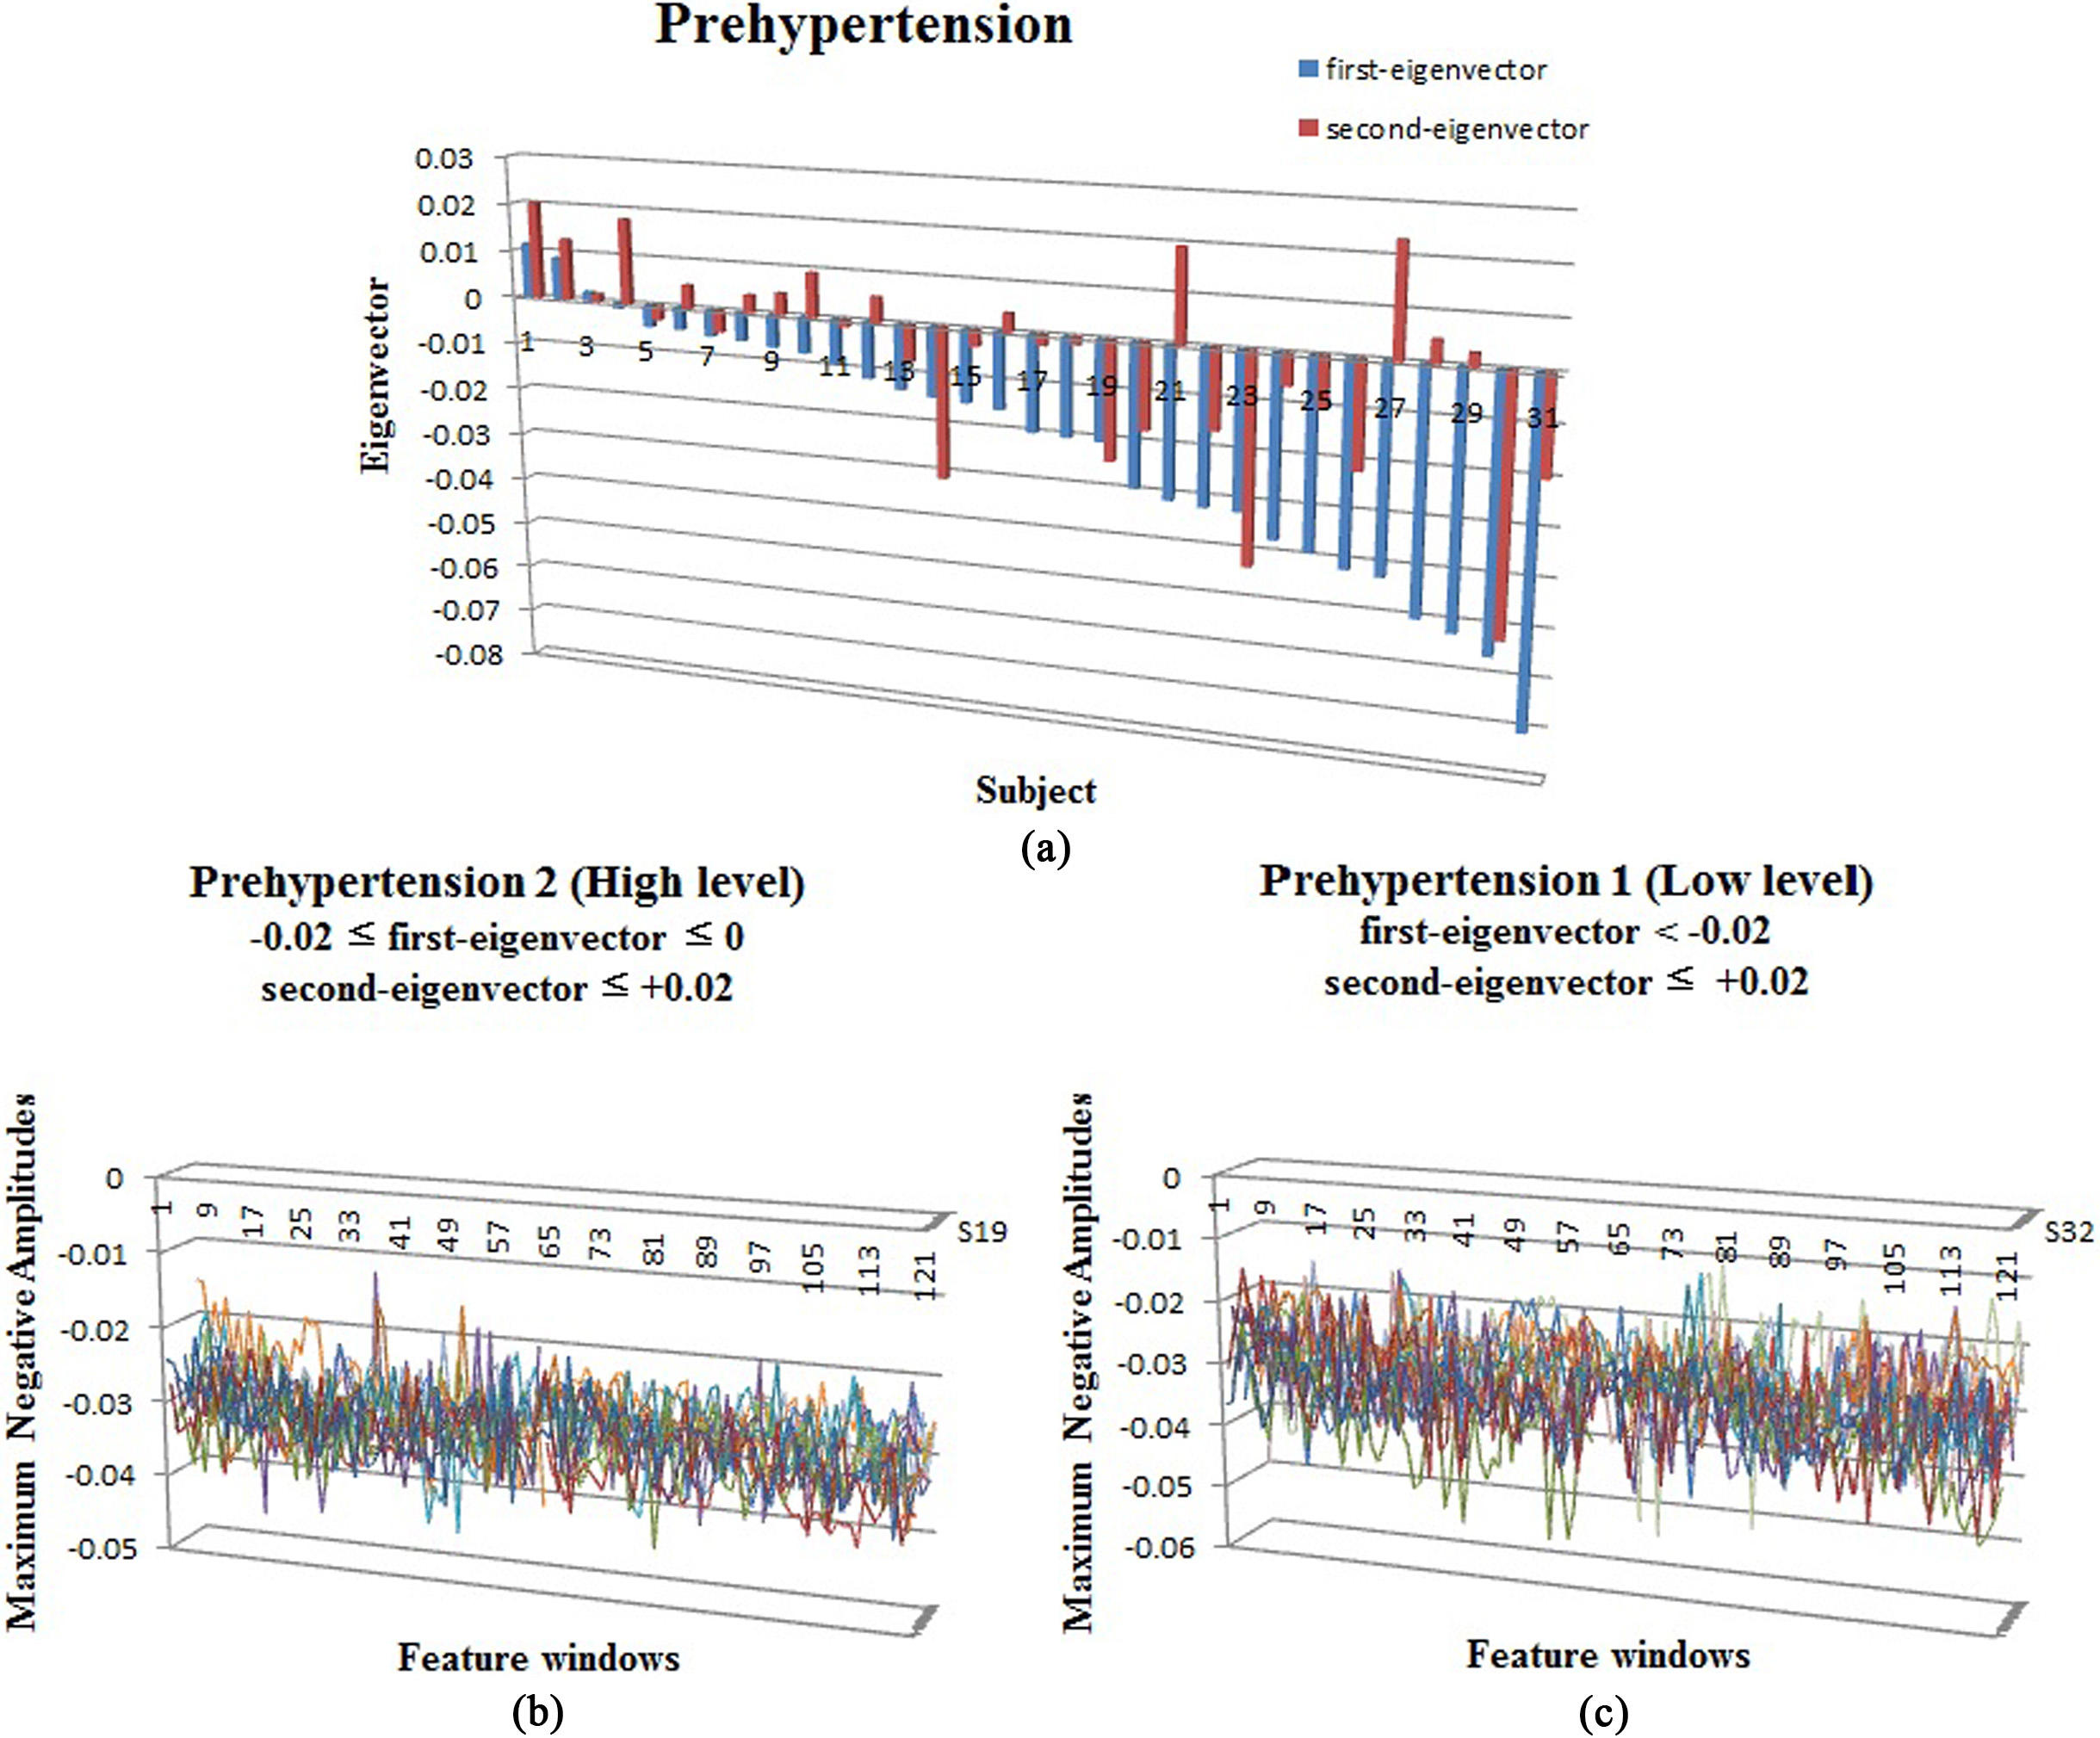 a. Analysis of first-eigenvector and second-eigenvector of prehypertension; b. MLA waveform distribution of prehypertension 2 (high-level); c. MLA waveform distribution of prehypertension 1 (low-level).